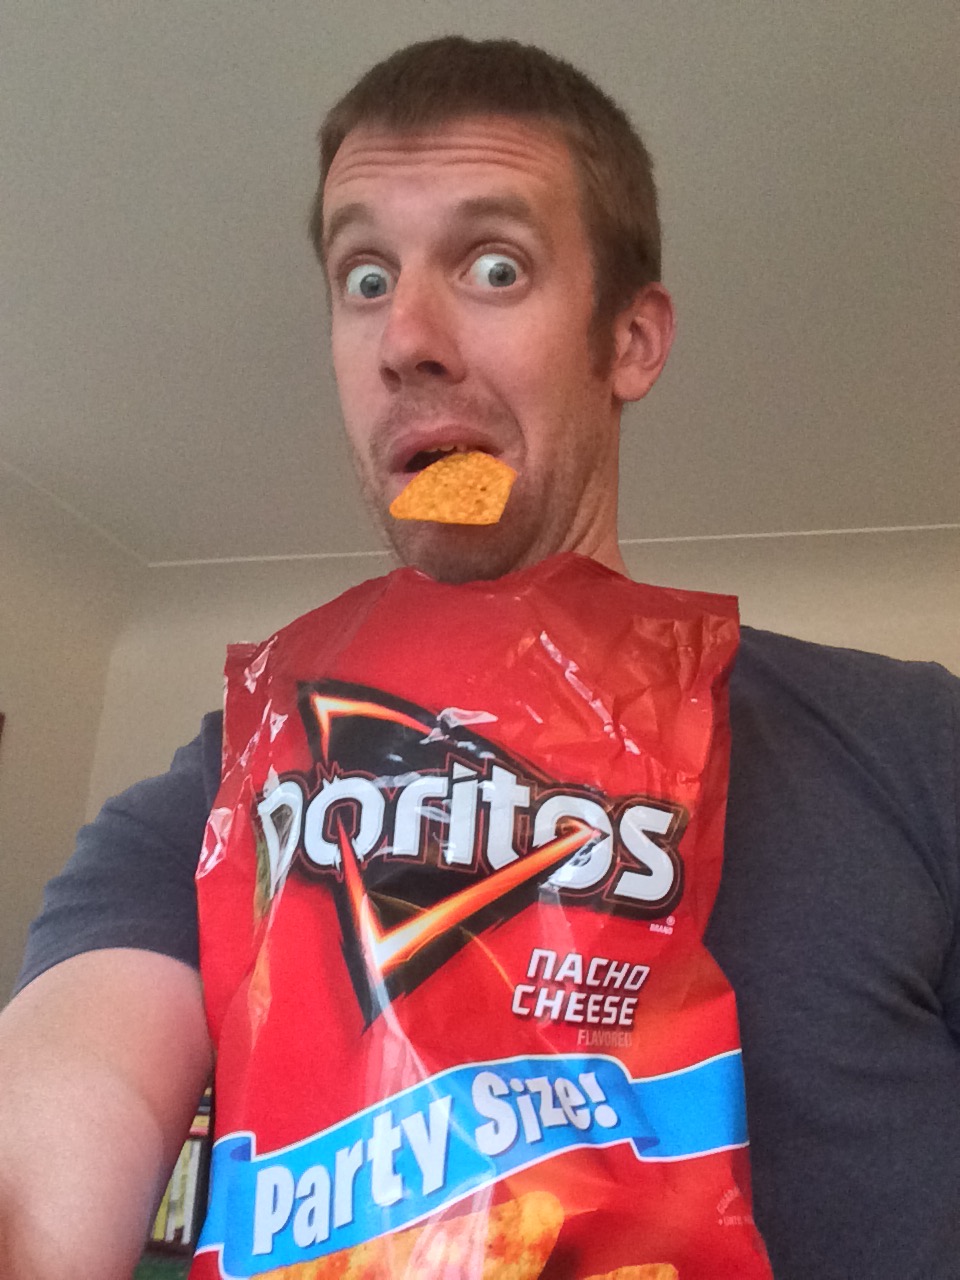 Todd_Eating_Doritos--for_blog_post.jpg